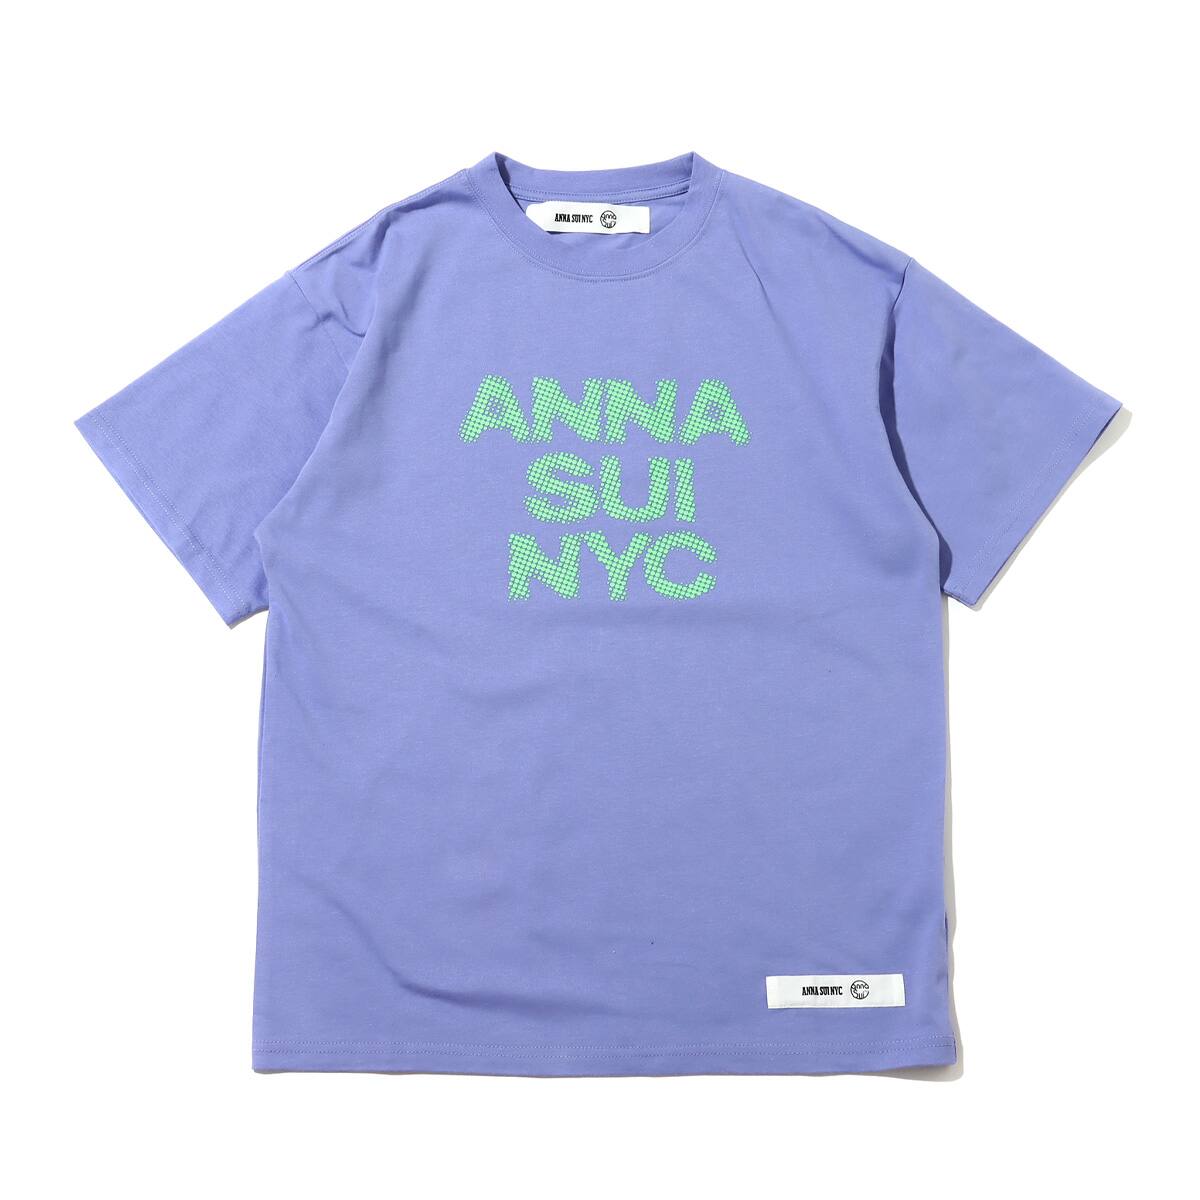 ANNA SUI NYC 発泡 ロゴTシャツ PURPLE 22FA-I_photo_large